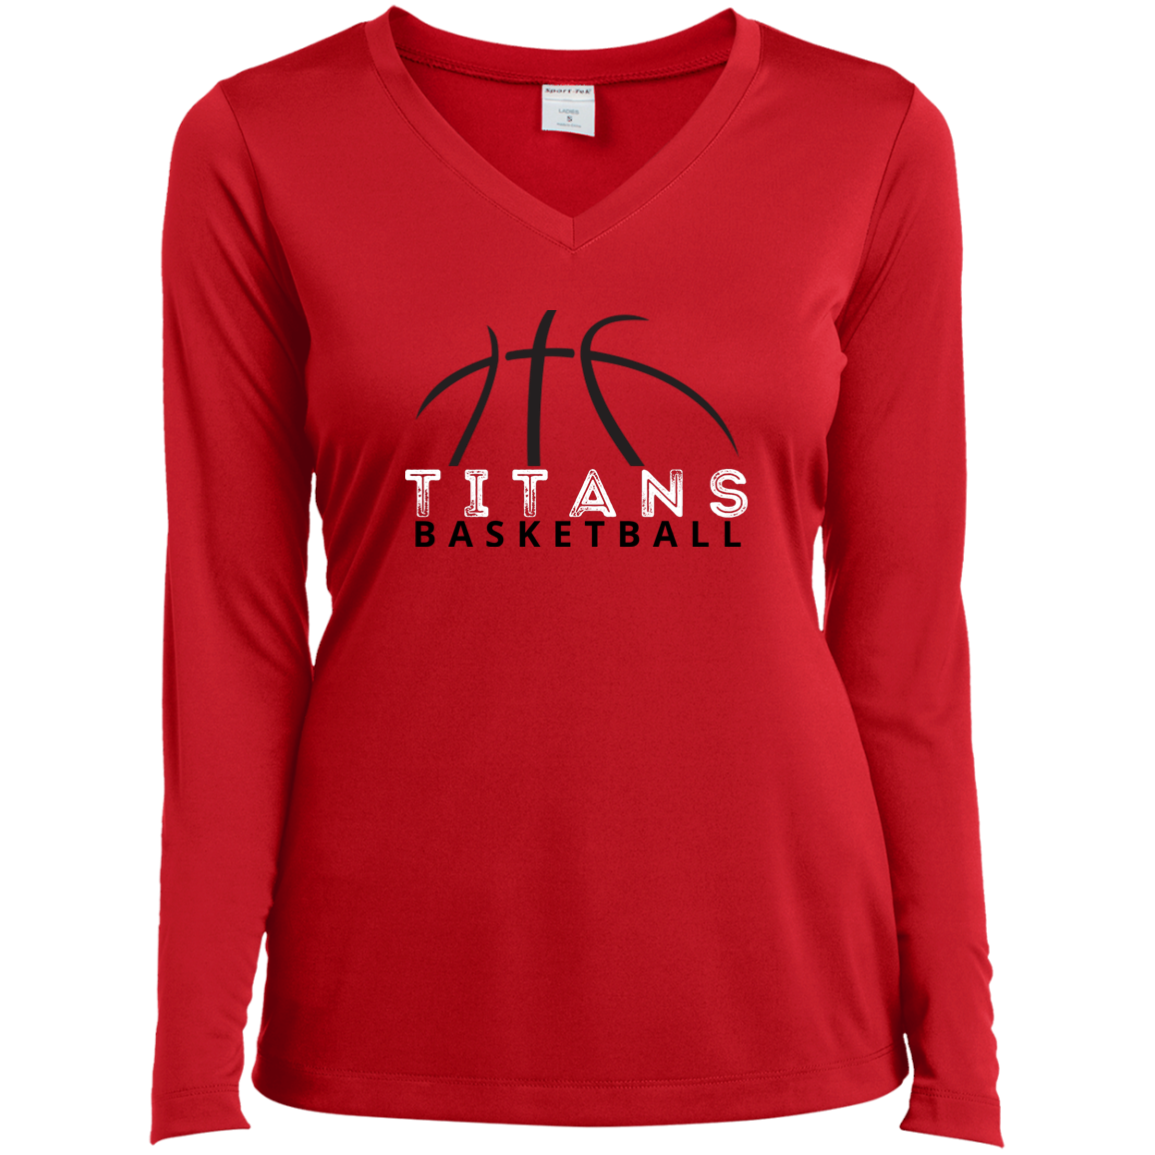 TITANS Basketball Women's Performance Long Sleeve T-Shirt